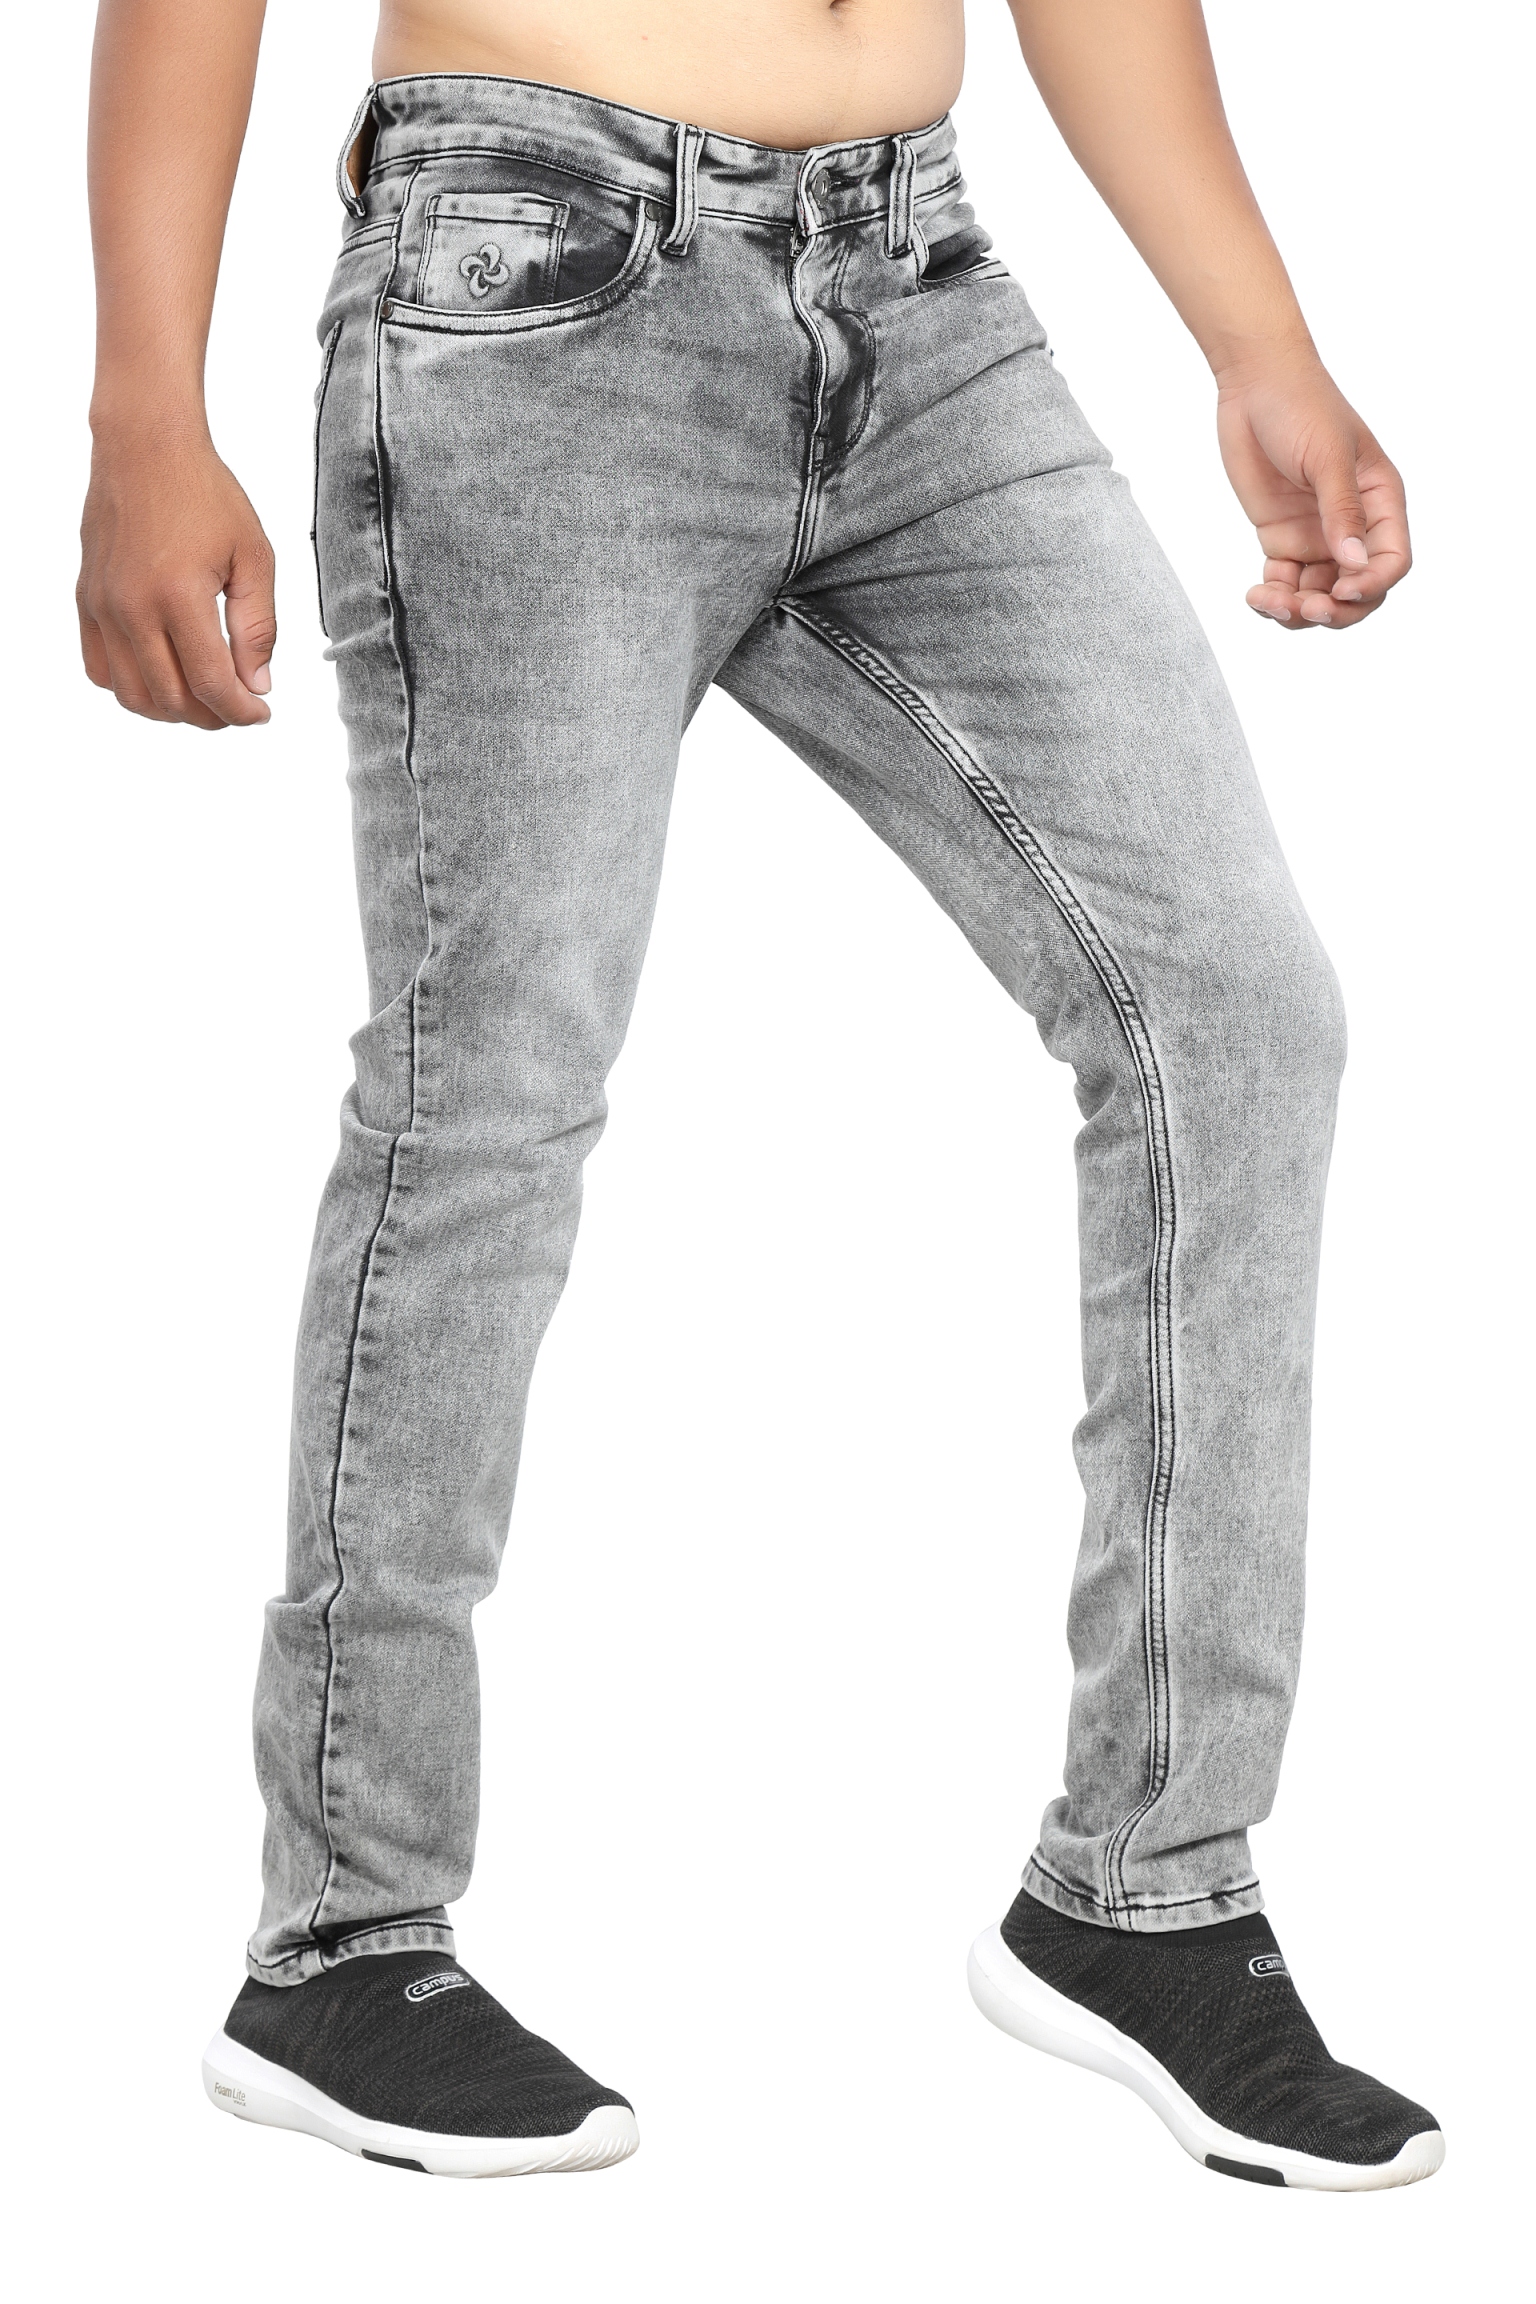 grey jeans